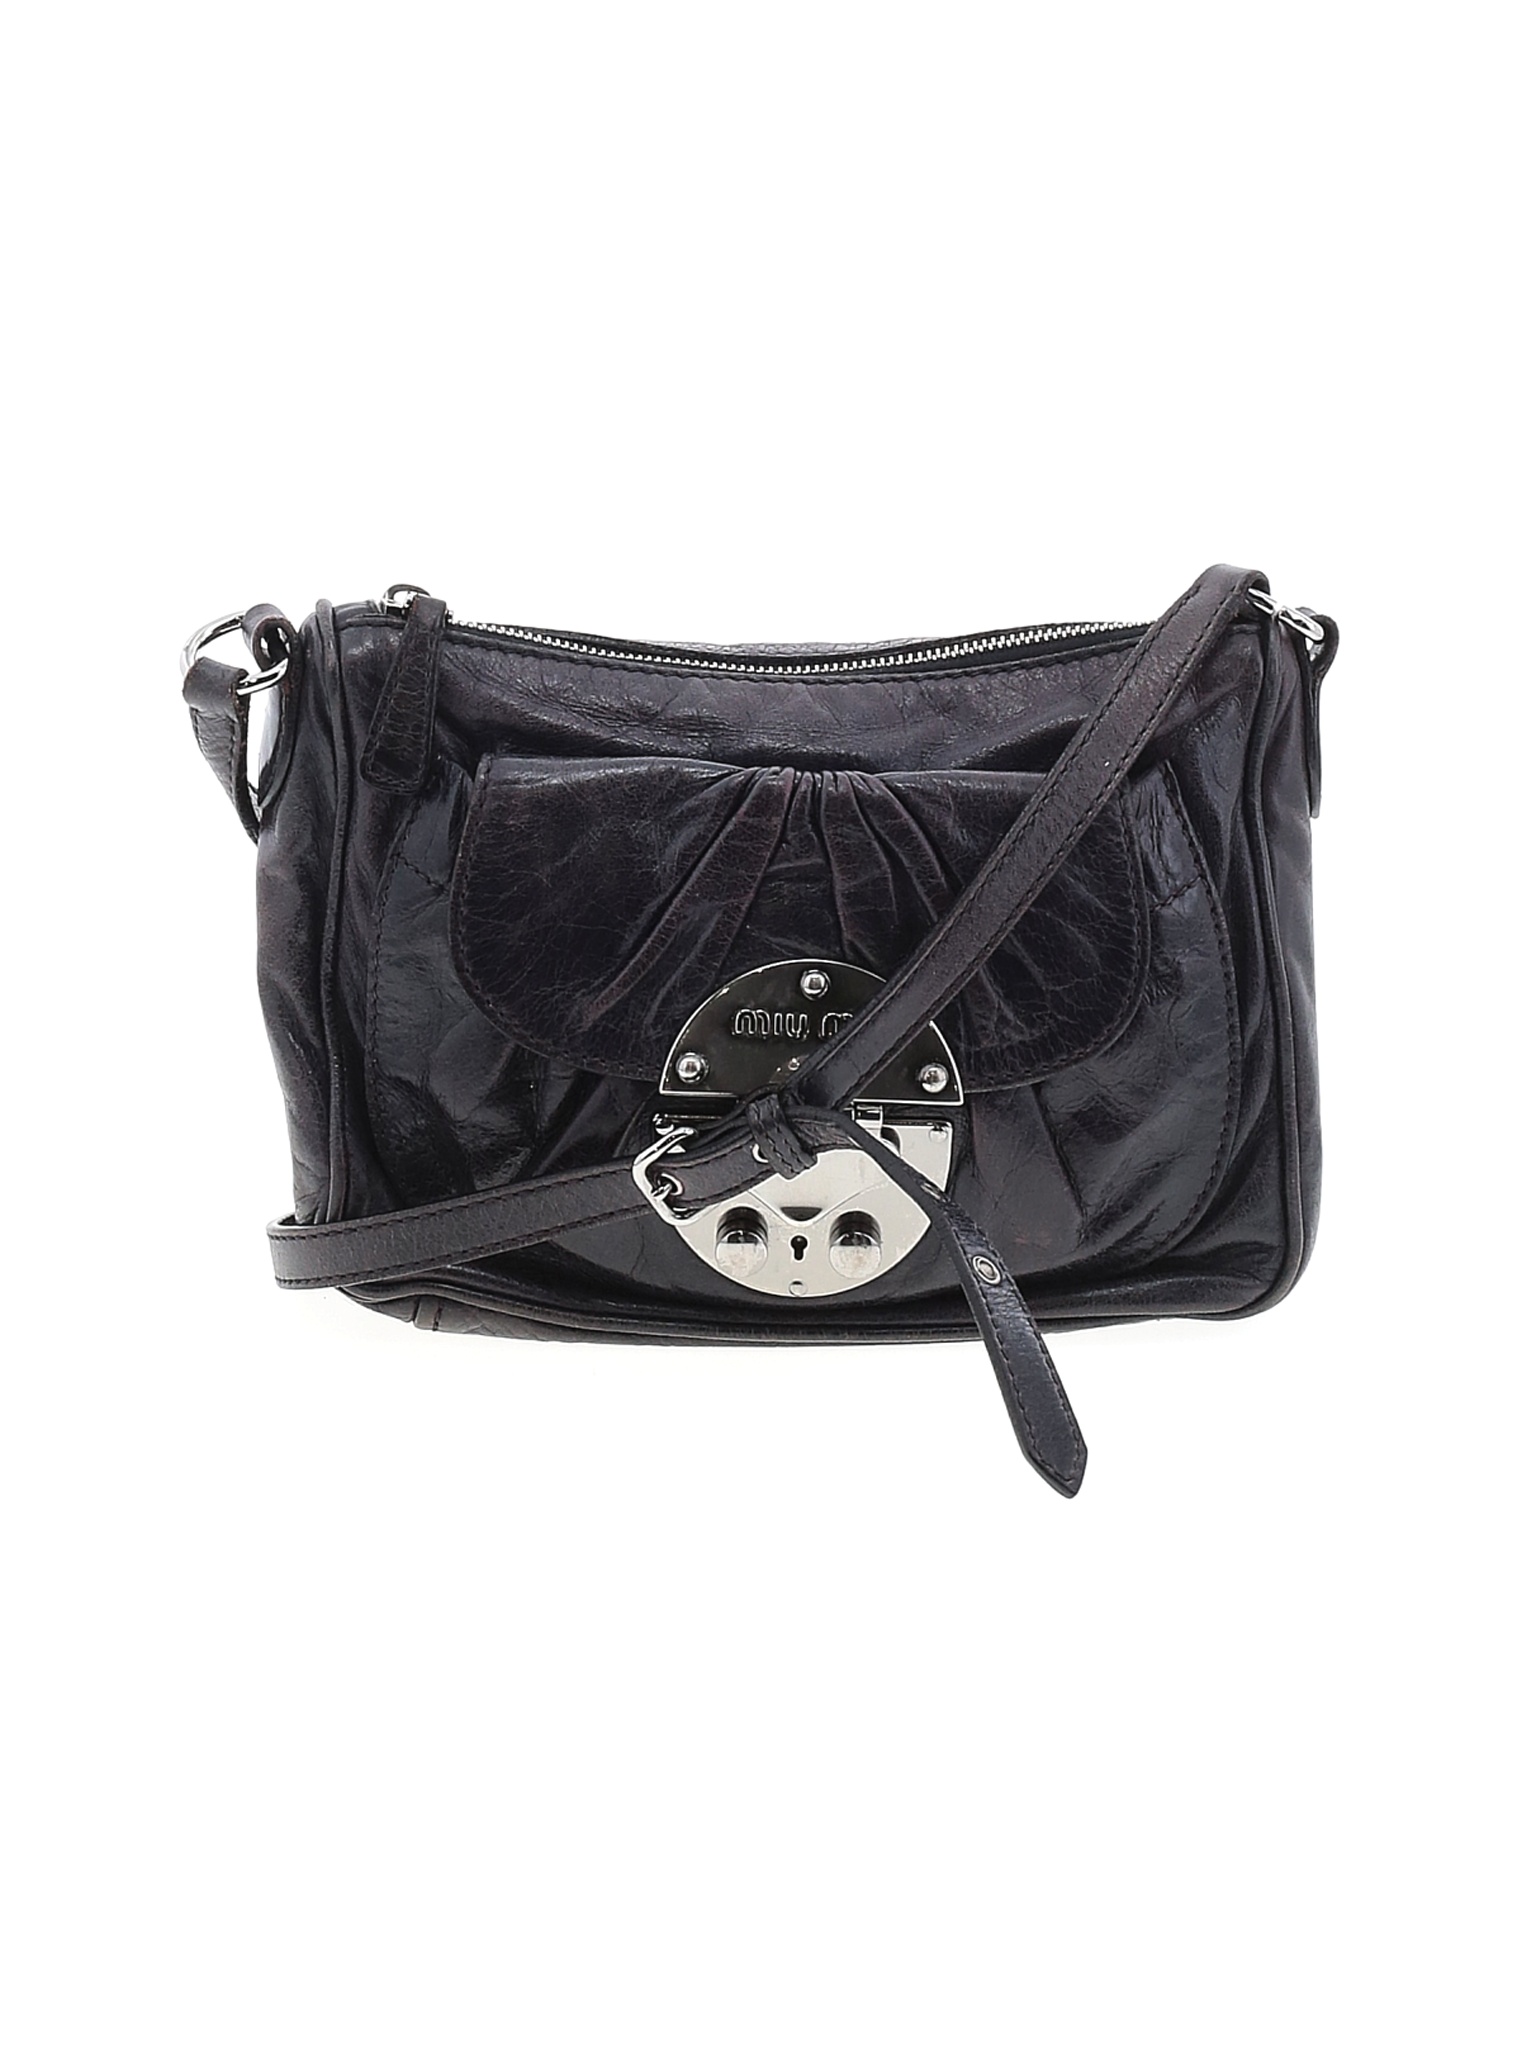 Miu Miu Women Black Leather Crossbody Bag One Size | eBay